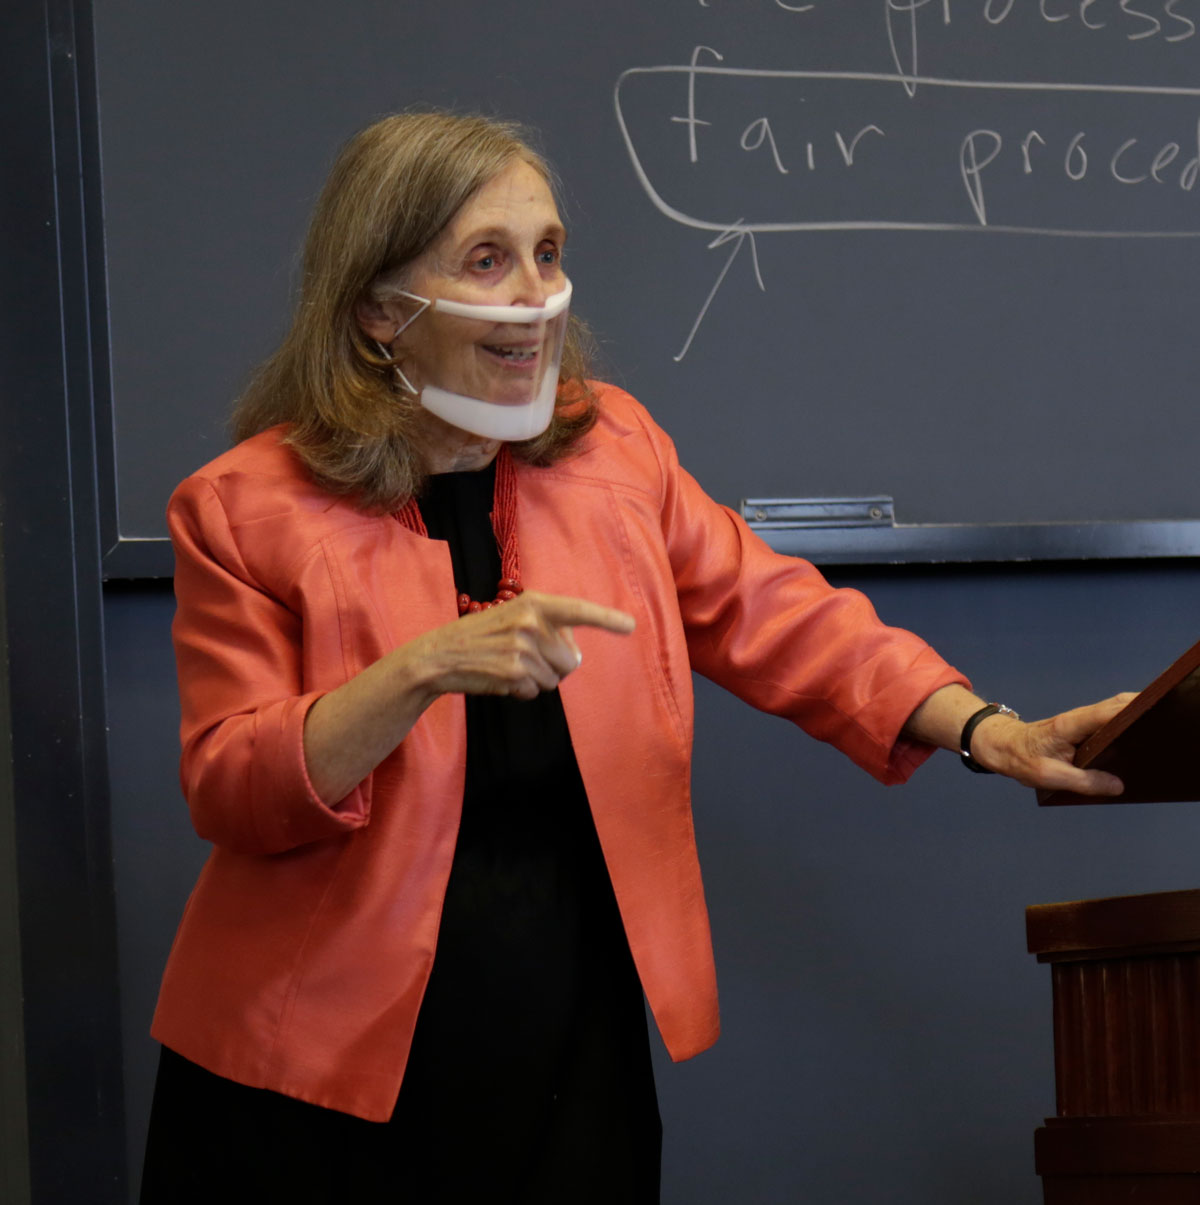 Professor Maryellen Fullerton teaches an in-person Civil Procedure class